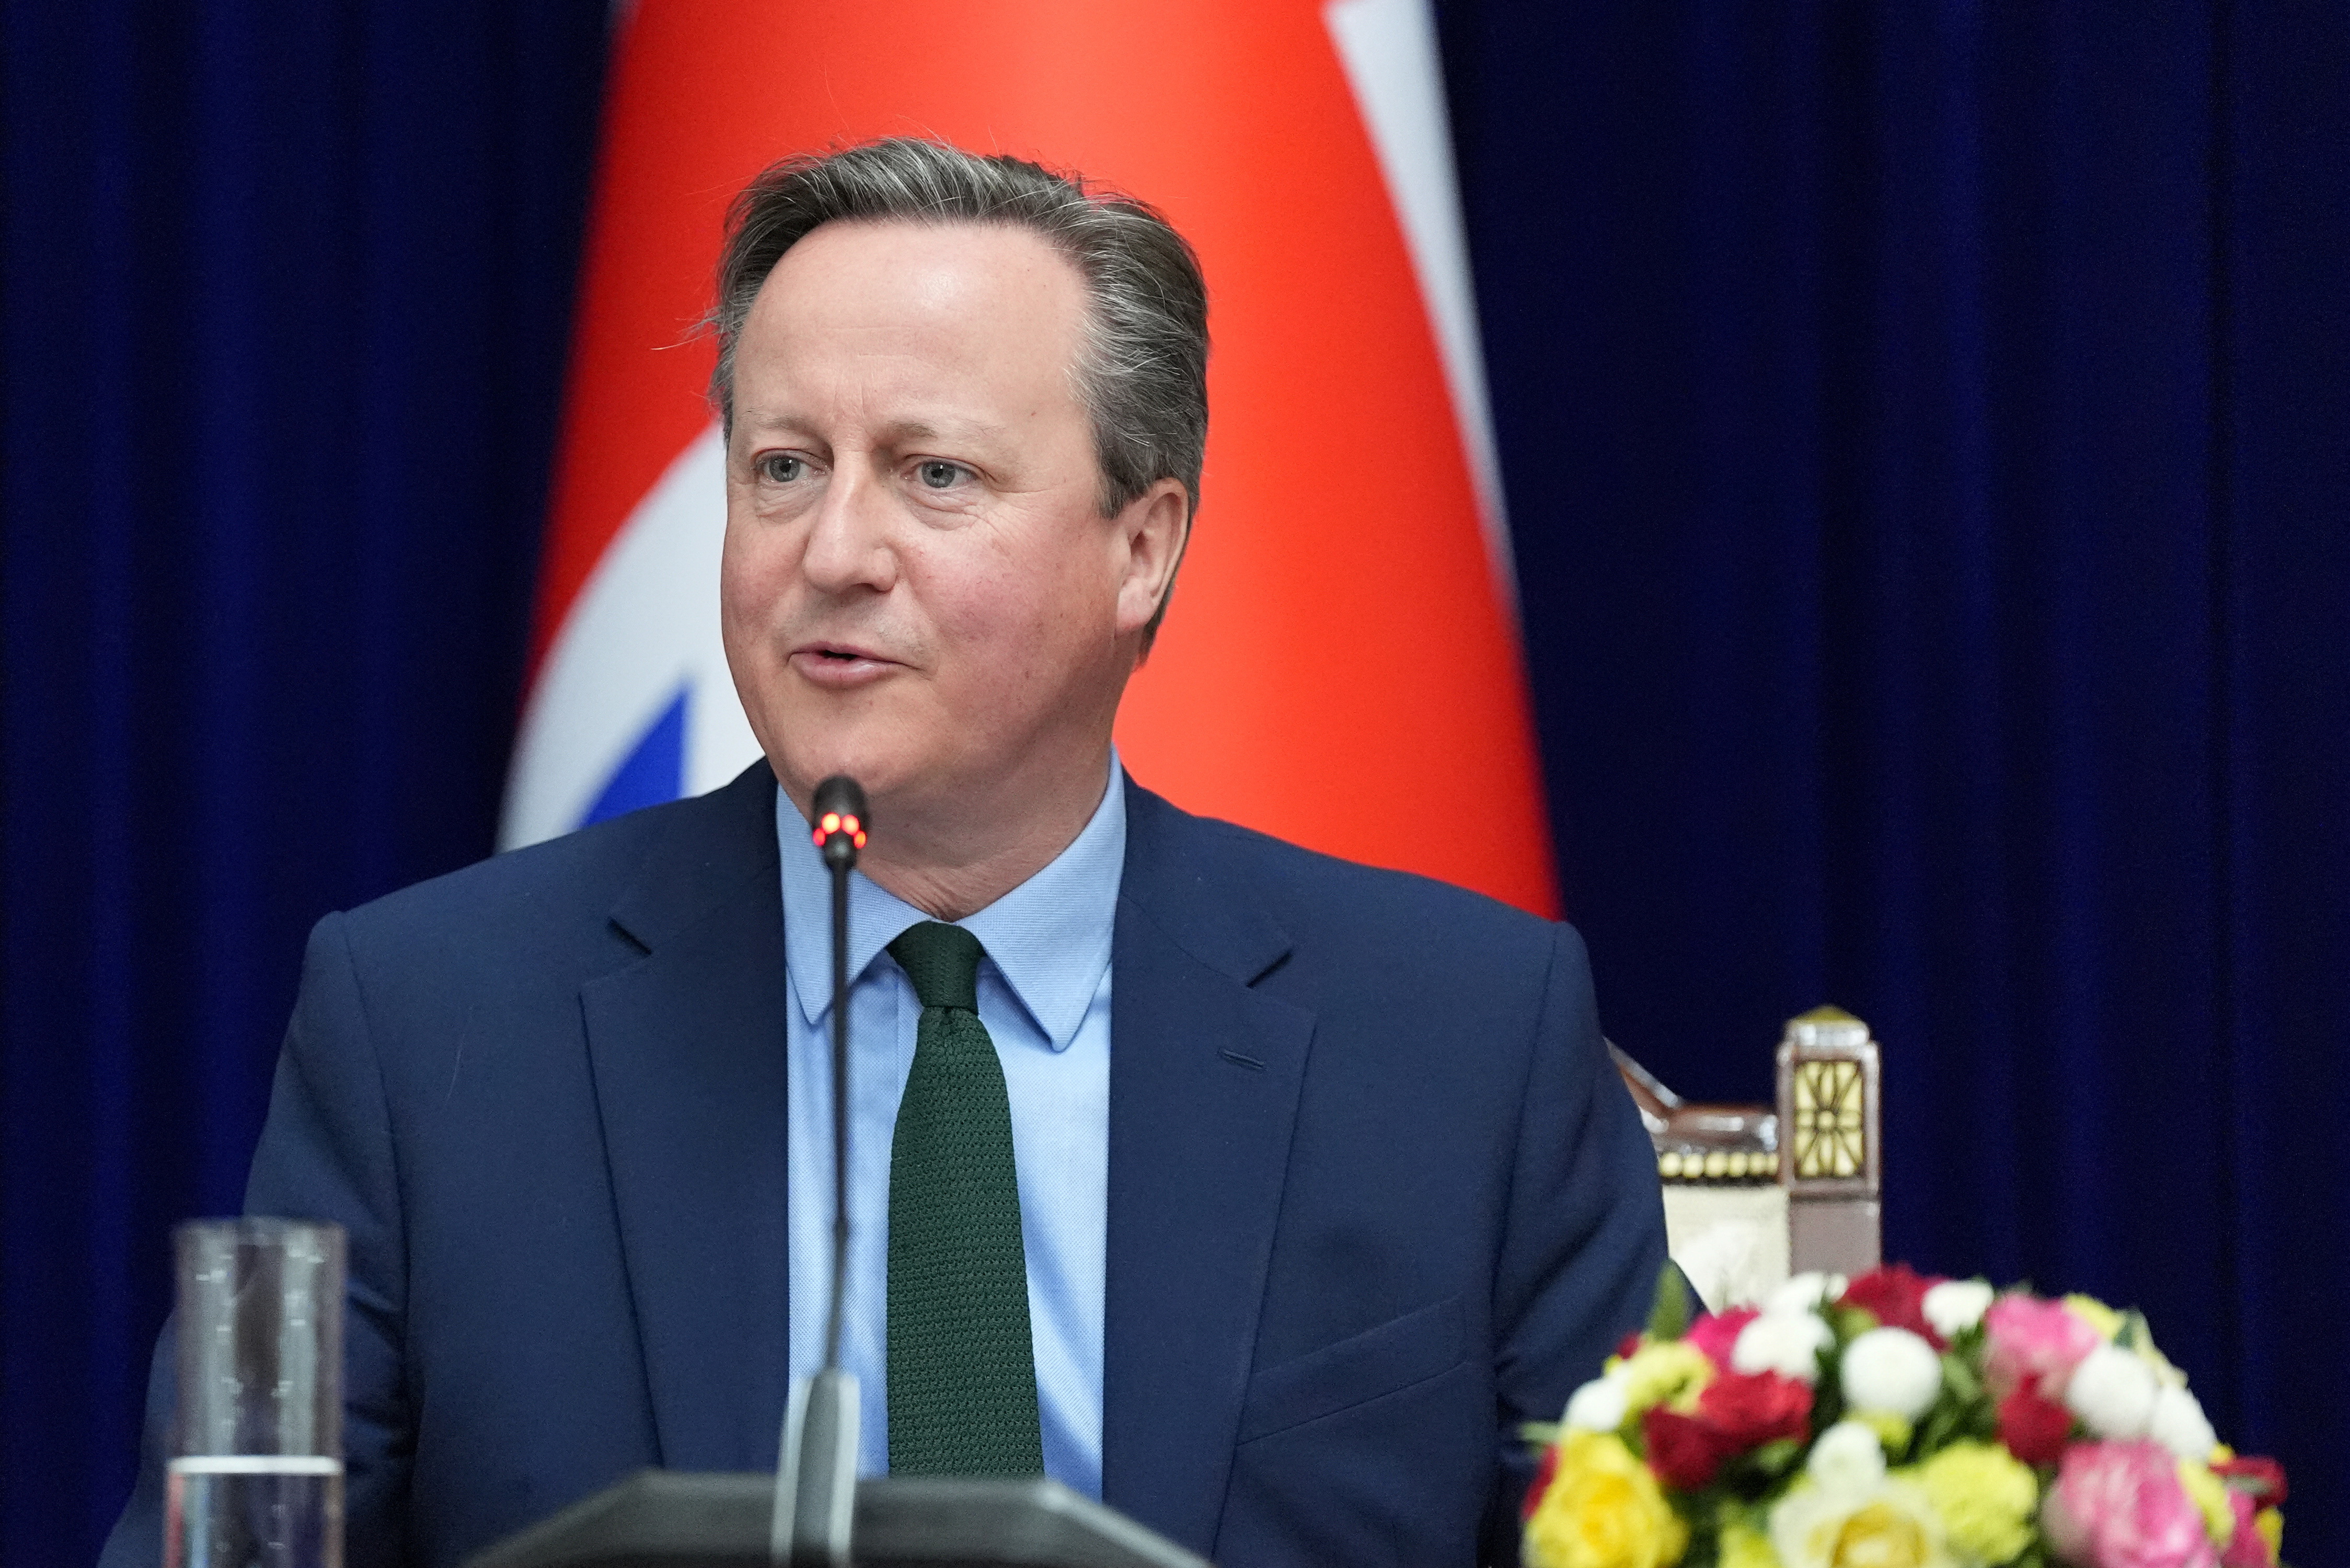 Britain's Foreign Secretary David Cameron visits Central Asia